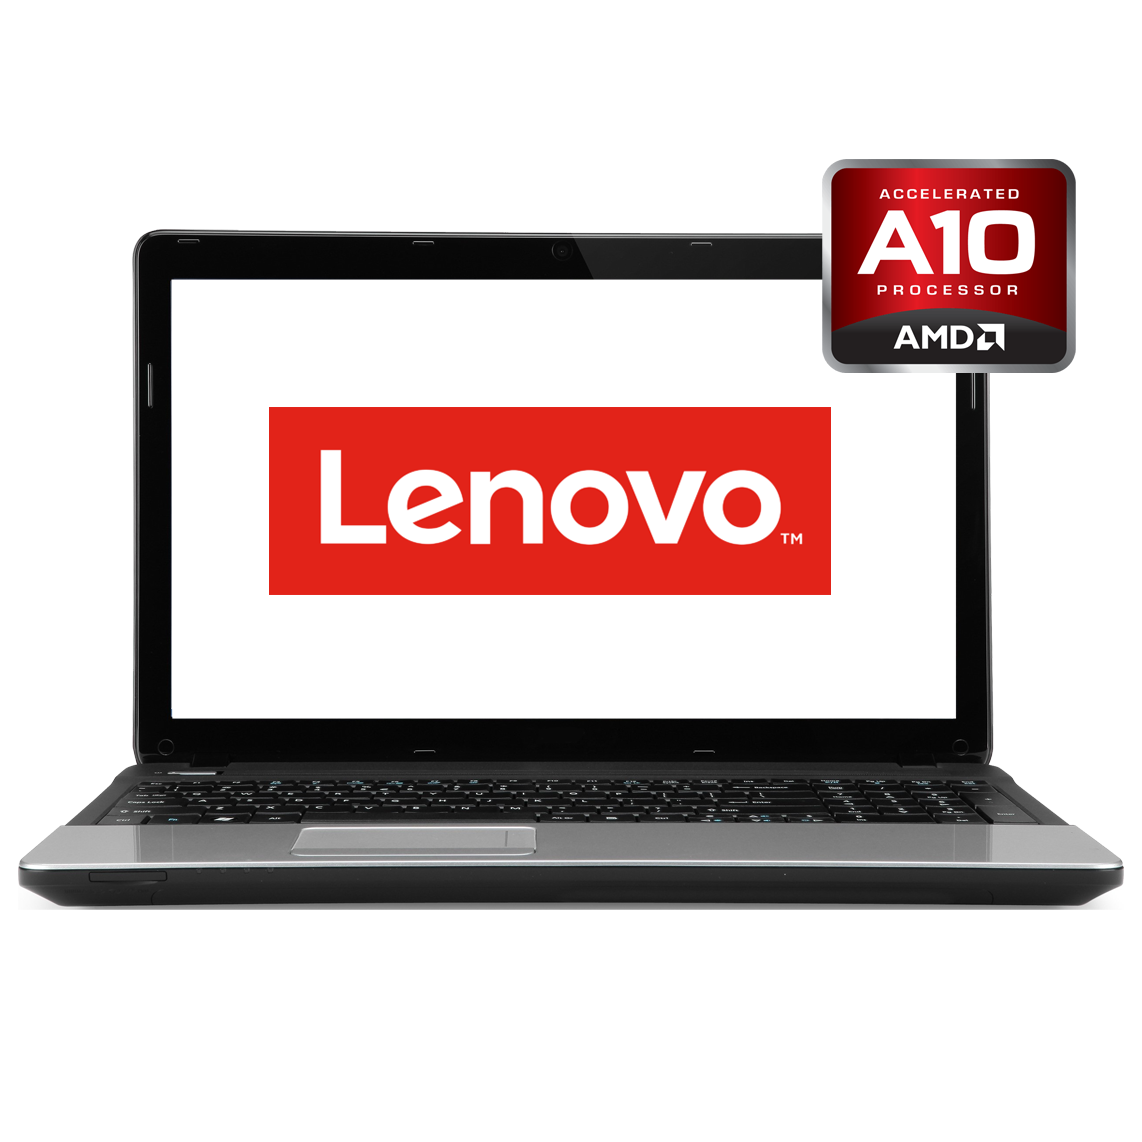 Lenovo - 15 inch AMD A10